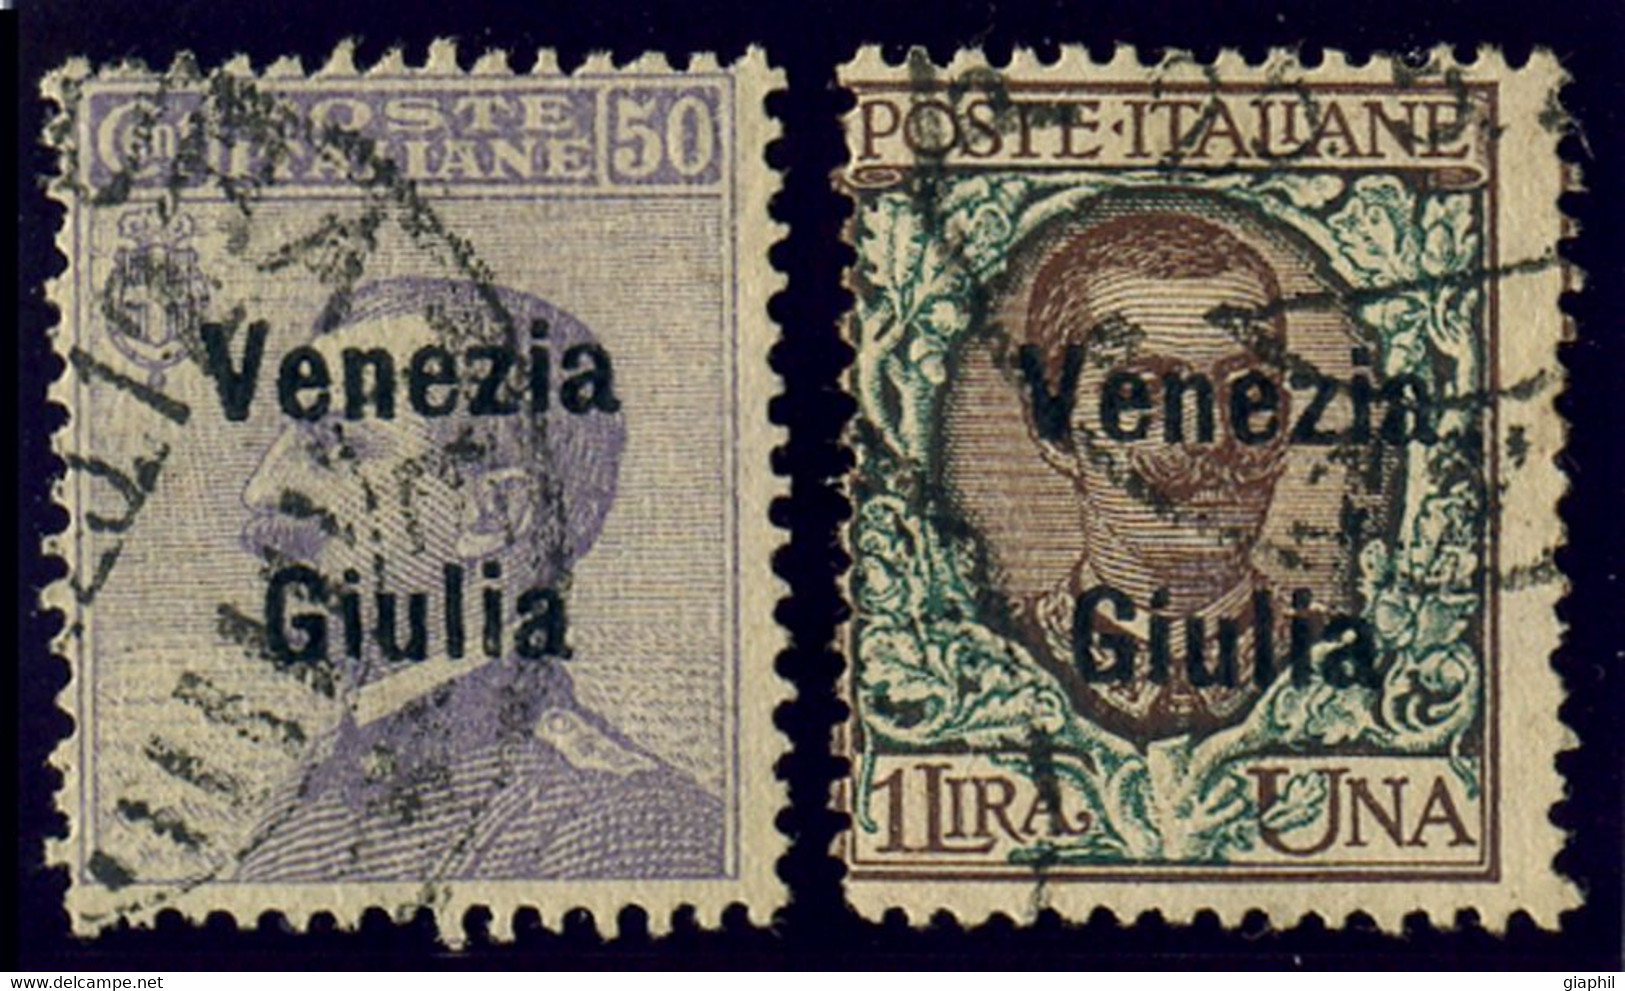 ITALY ITALIA VENEZIA GIULIA 1918-19 50 C,, 1 L. (Sass. 27, 29) USATI OFFERTA! - Venezia Giulia